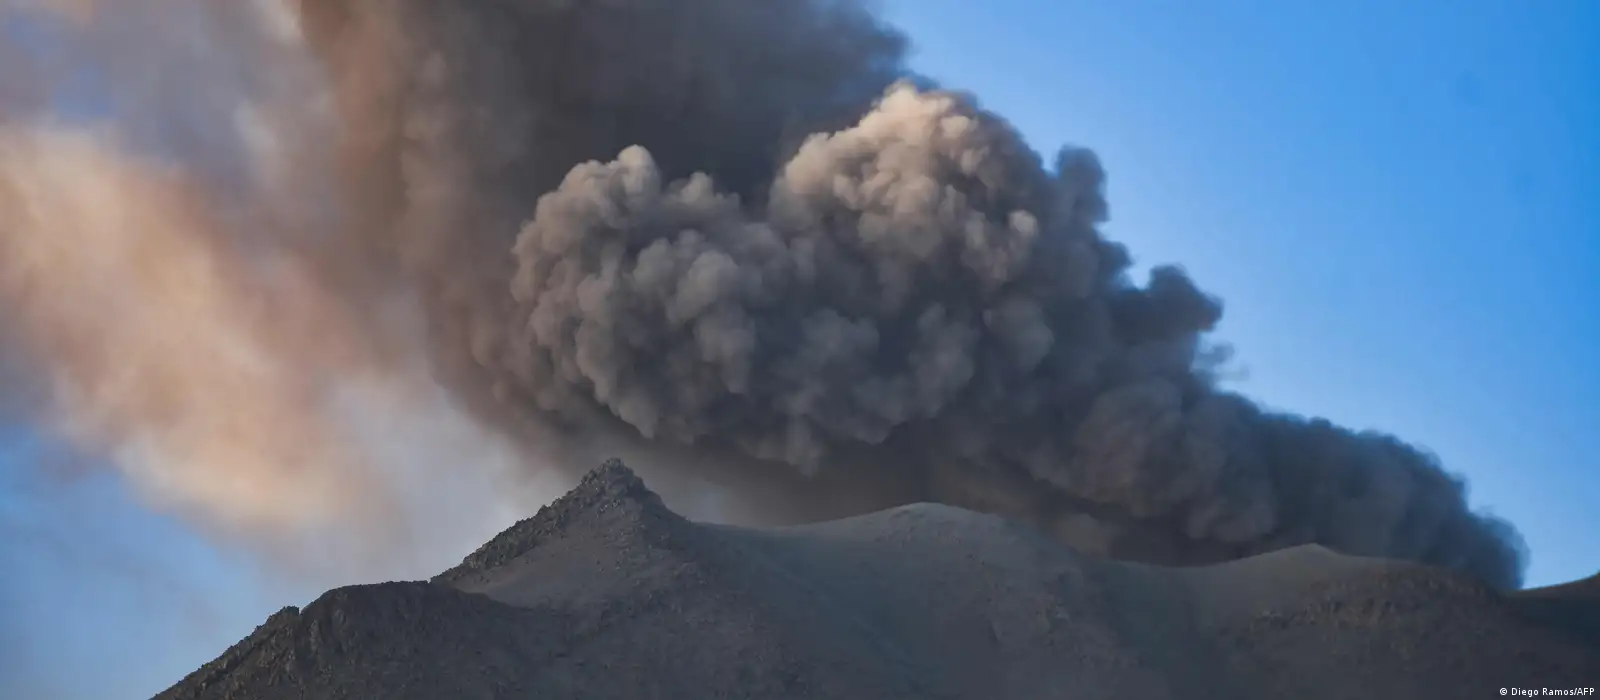 Rings of Power' Episode 6 Mount Doom Eruption: Making of